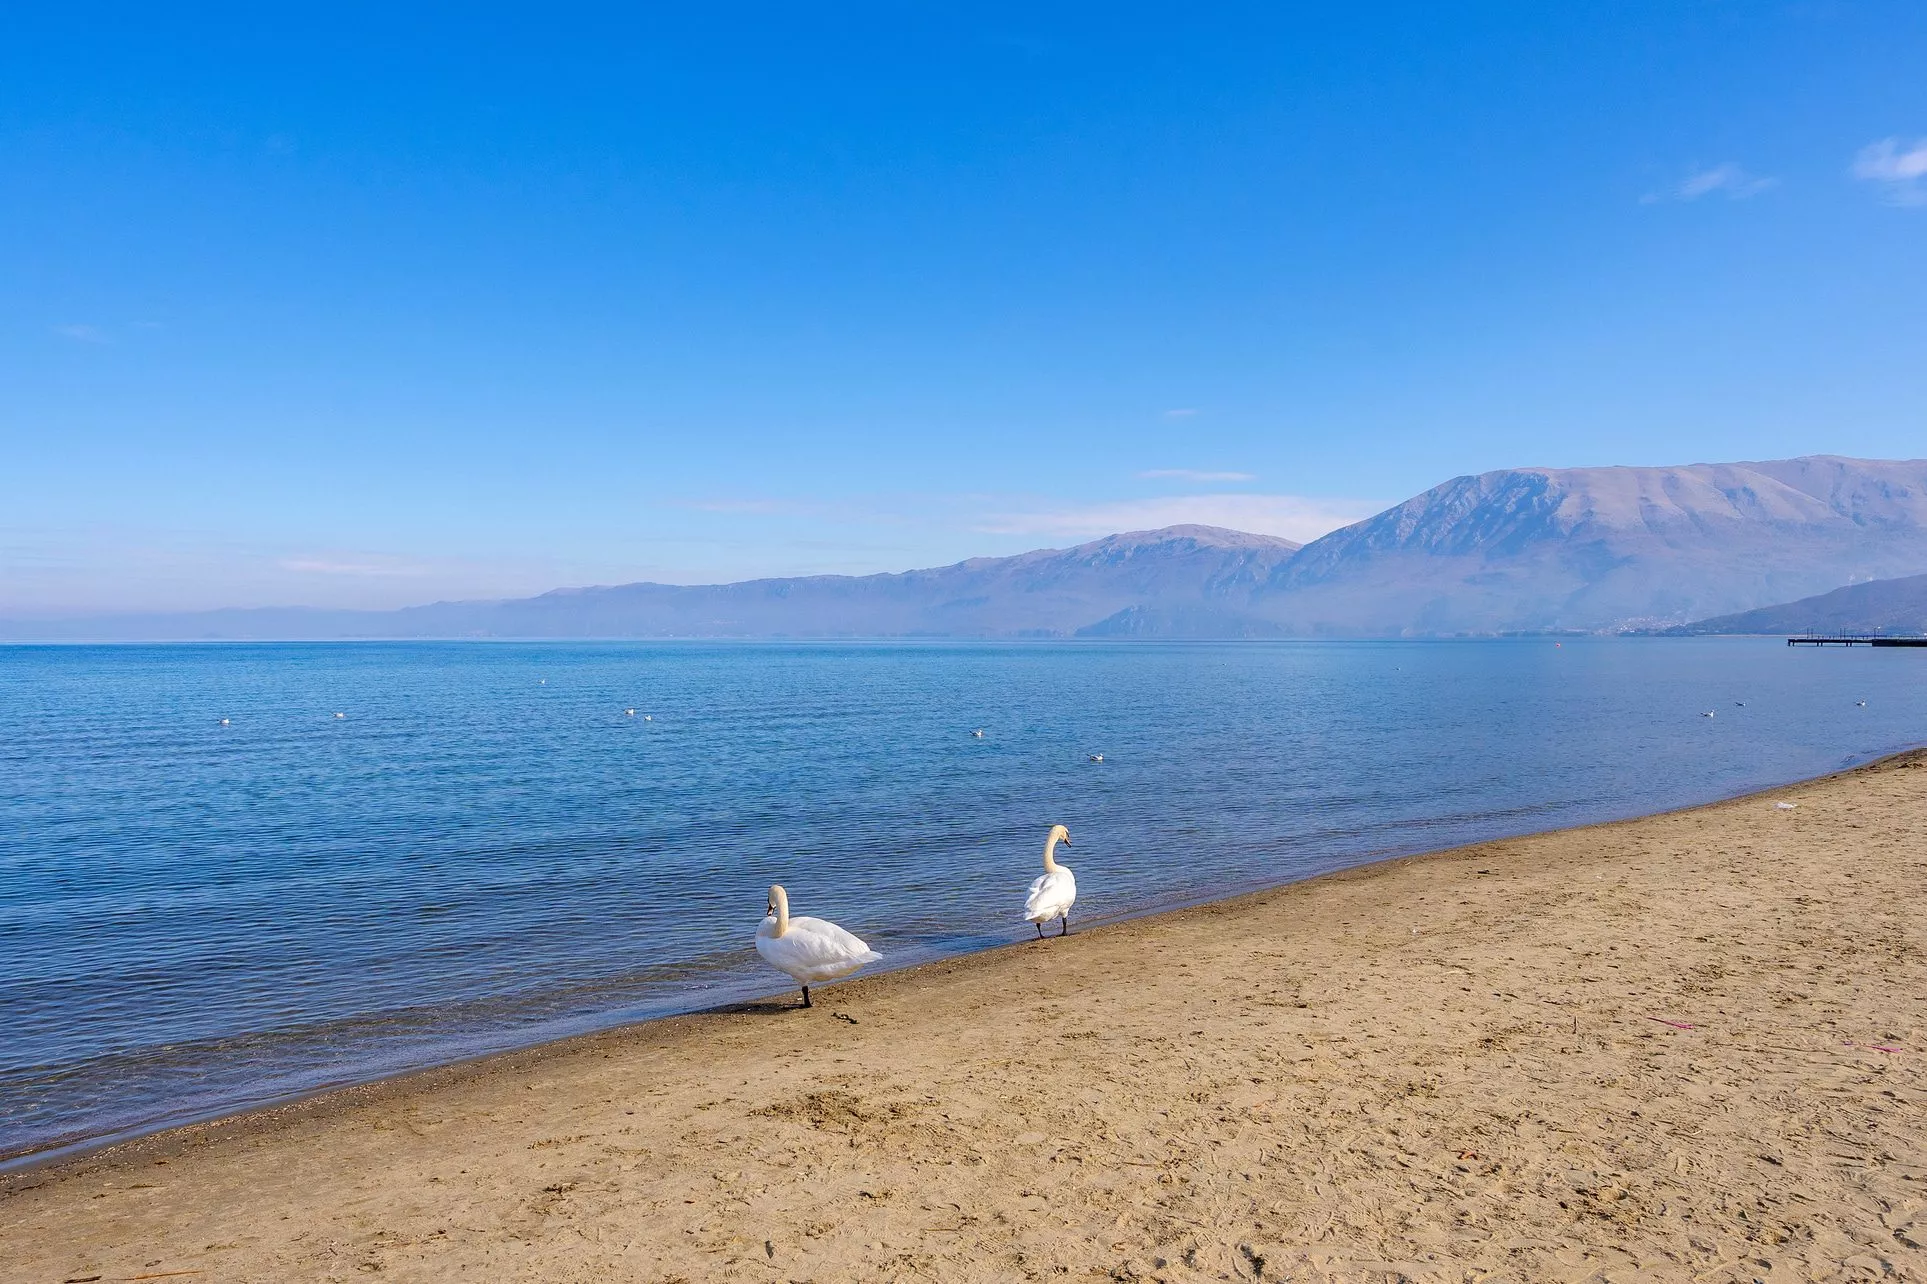 Ohrid-plage de sable